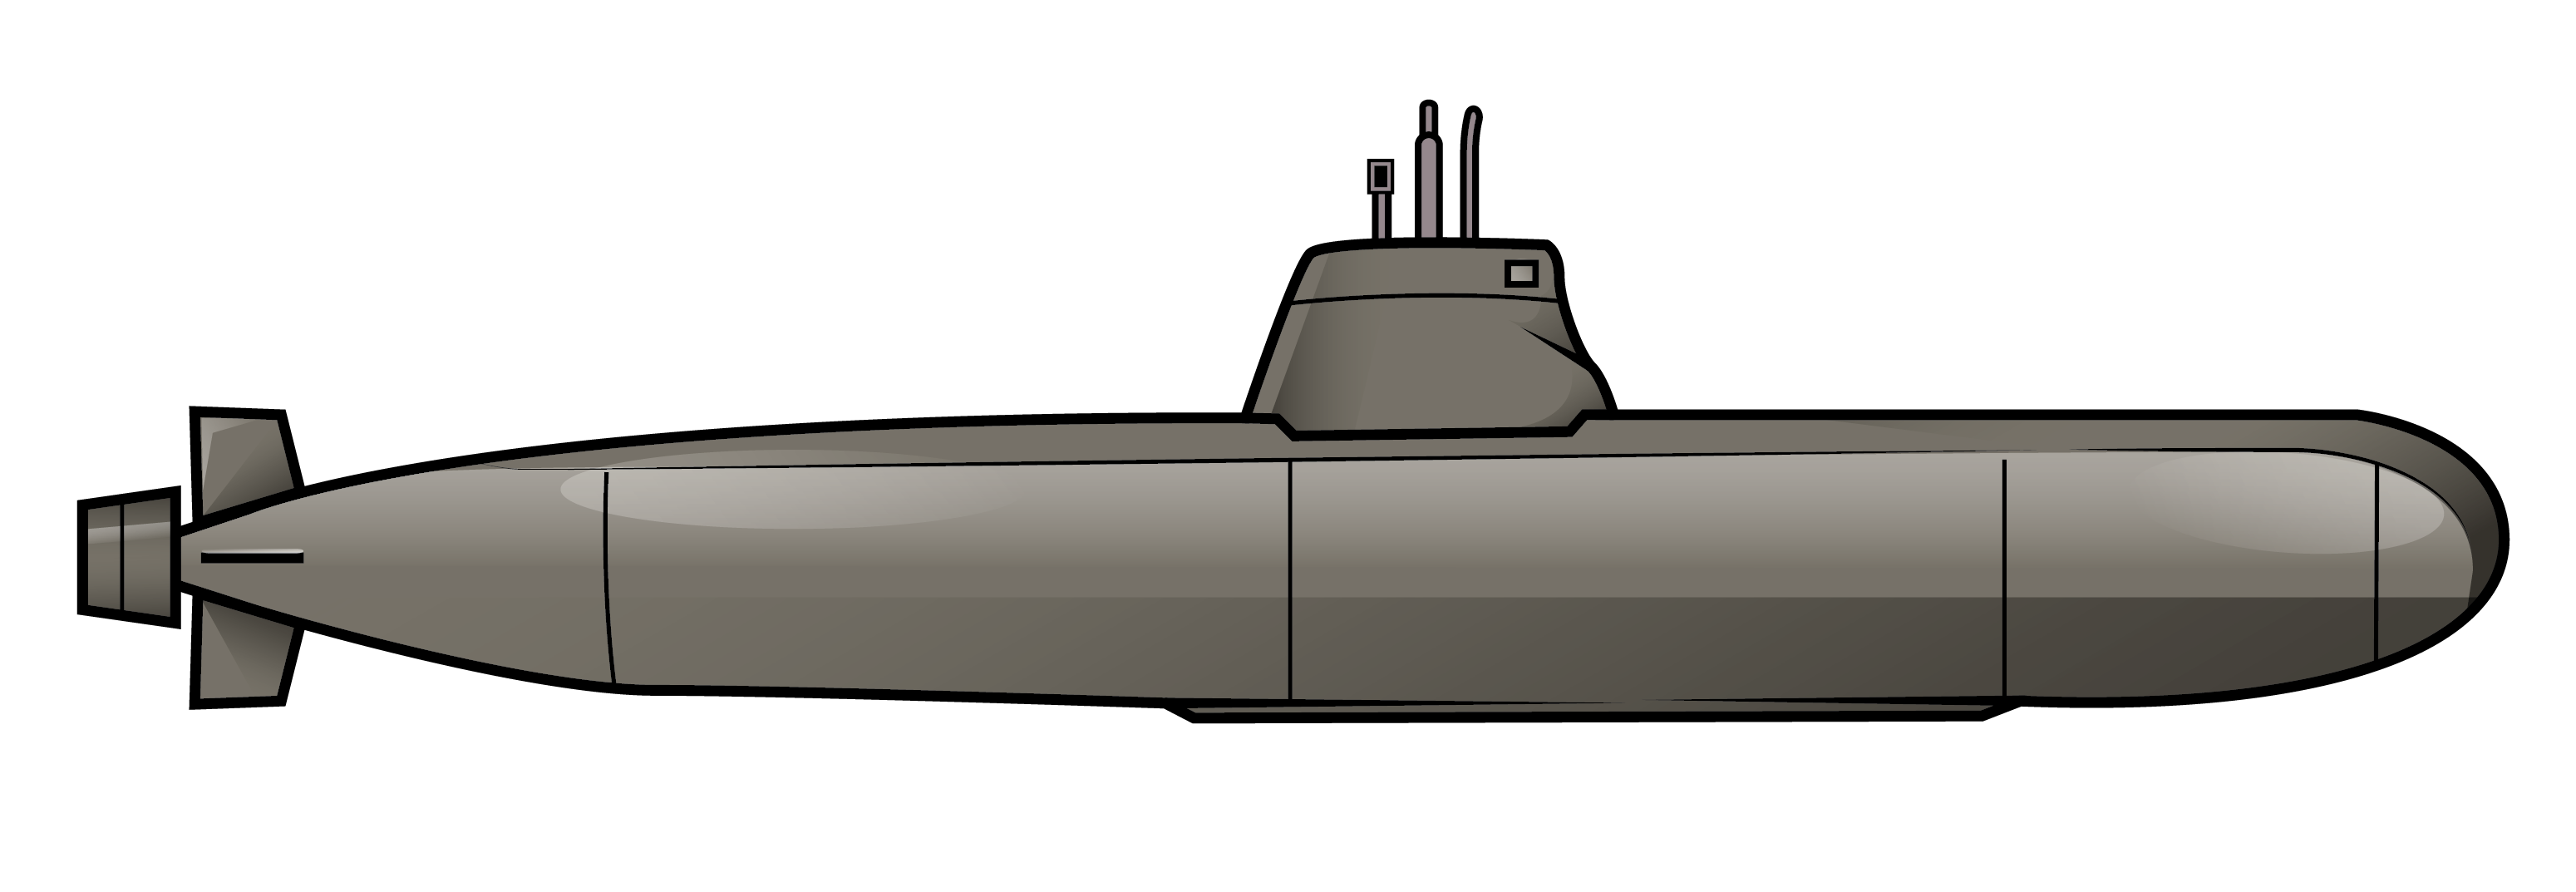 Submarine clipart submarine.